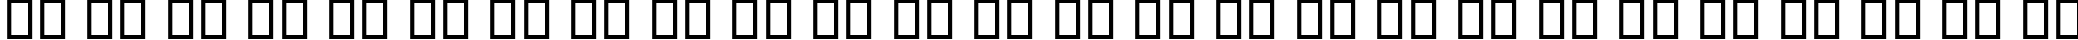 Пример написания английского алфавита шрифтом B Aseman Italic